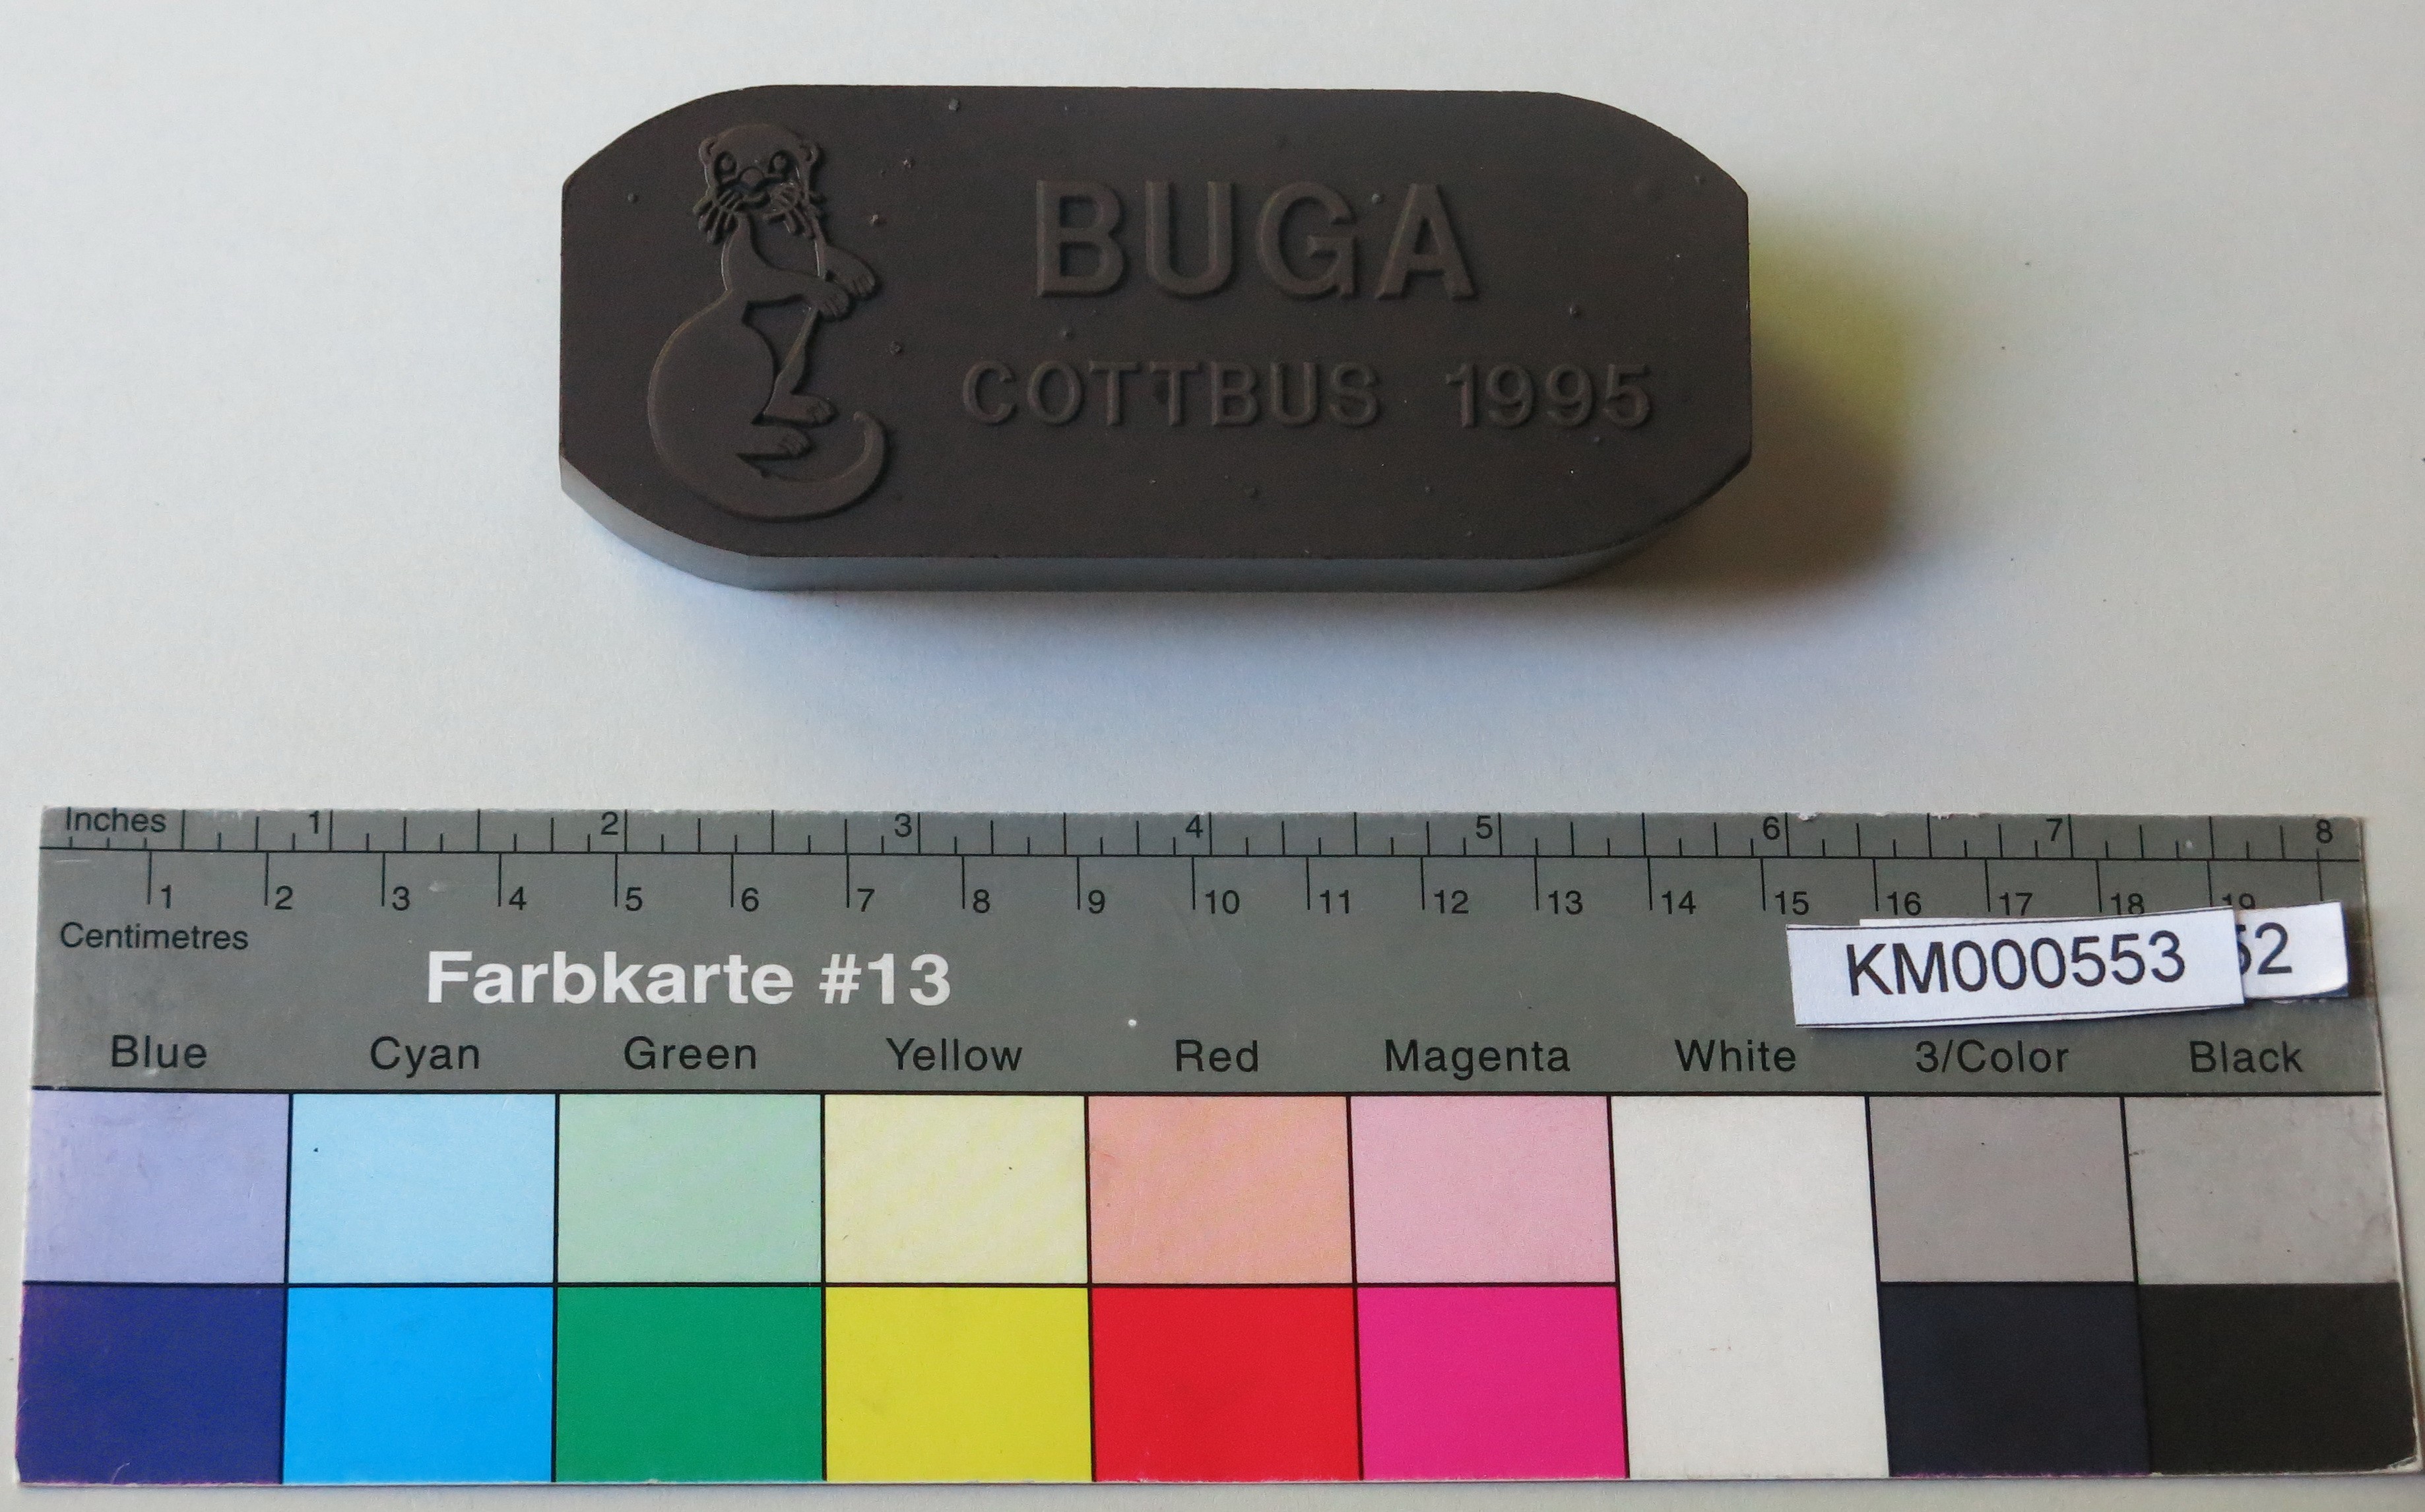 Zierbrikett "BUGA COTTBUS 1995" (Energiefabrik Knappenrode CC BY-SA)